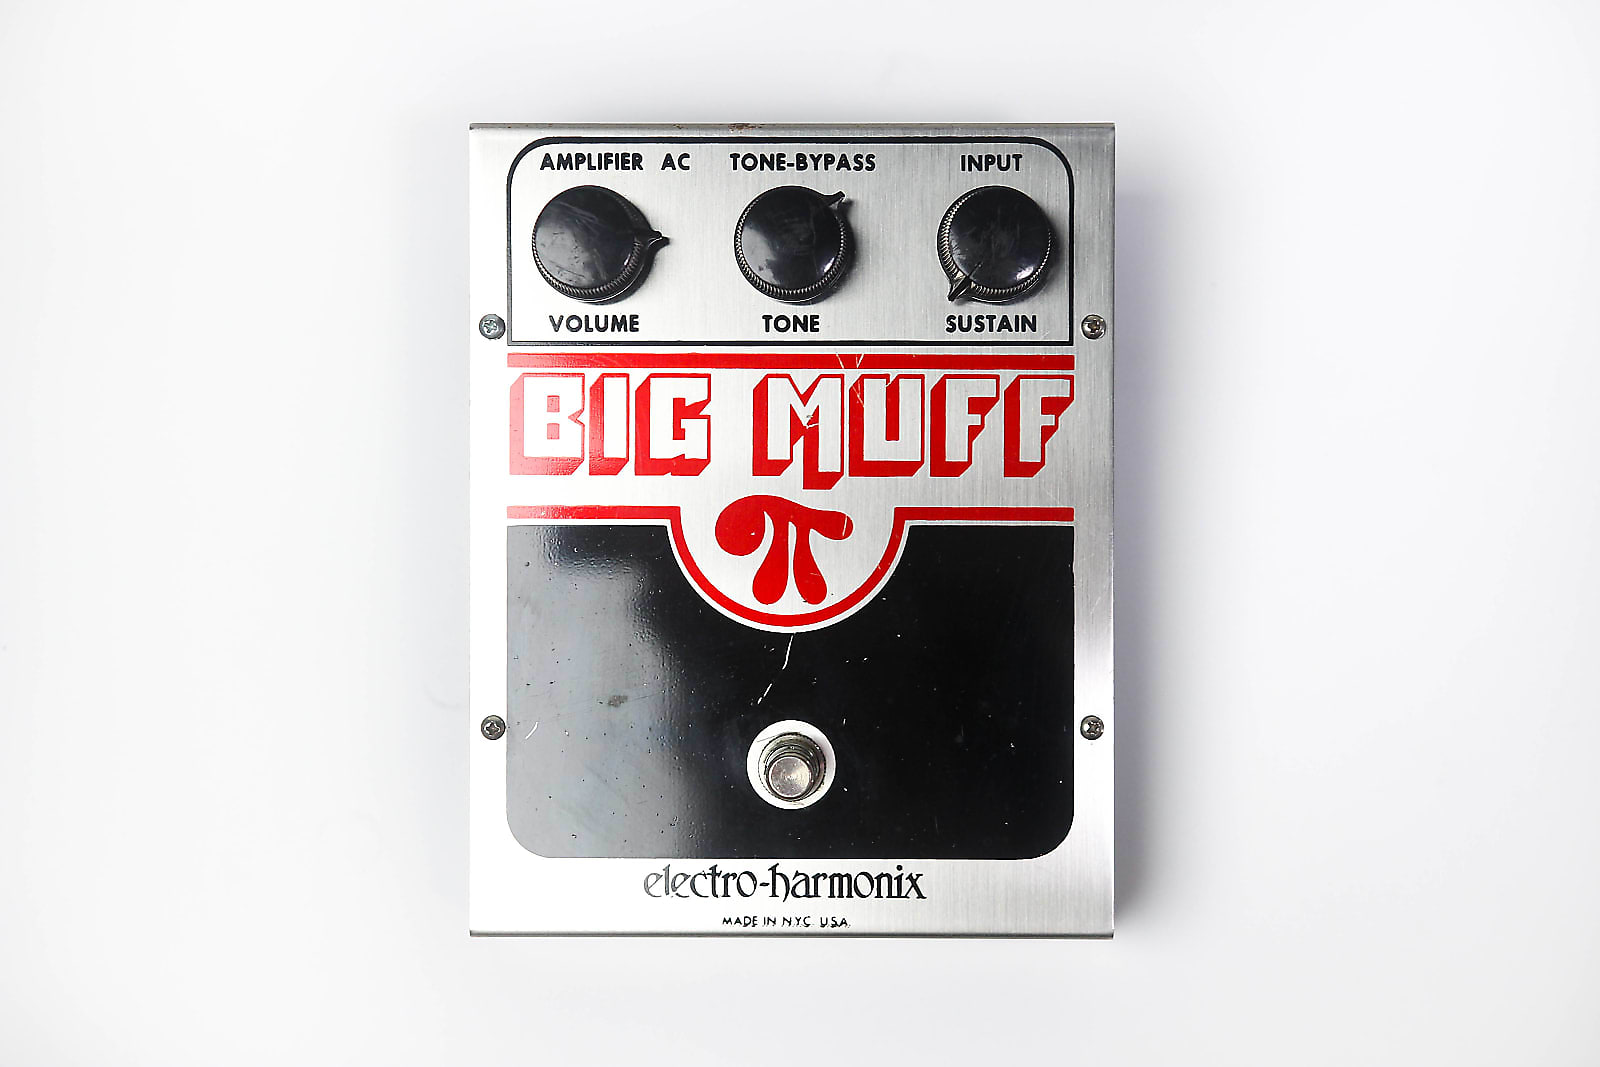 OP-AMP Big Muff-